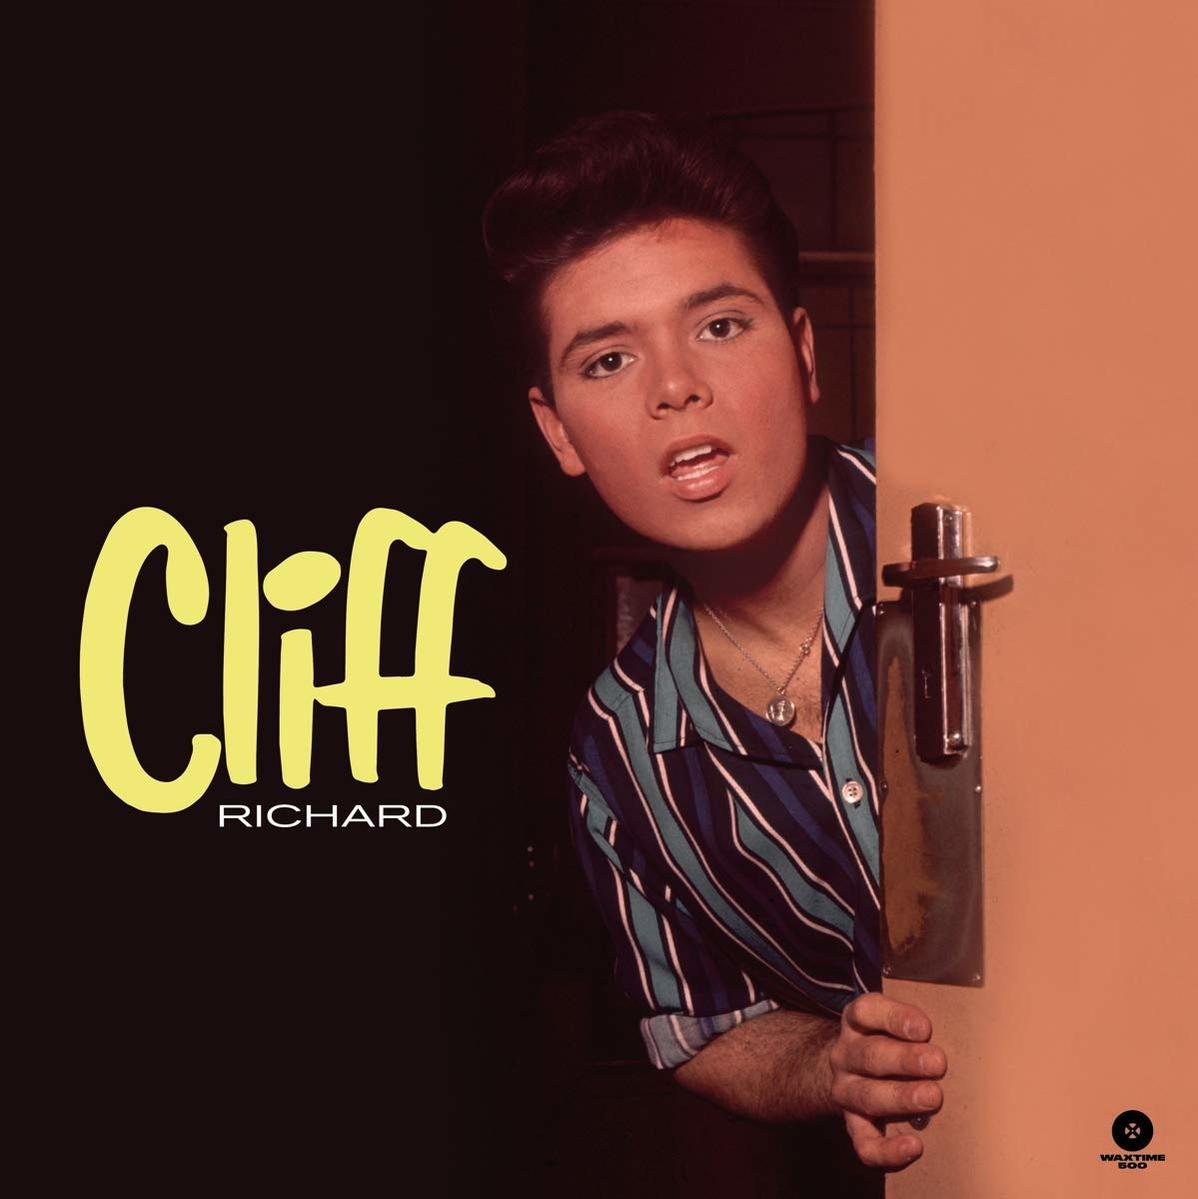 Cliff Richard - Cliff+2 (180g (Vinyl) - Bonus LP) Tracks